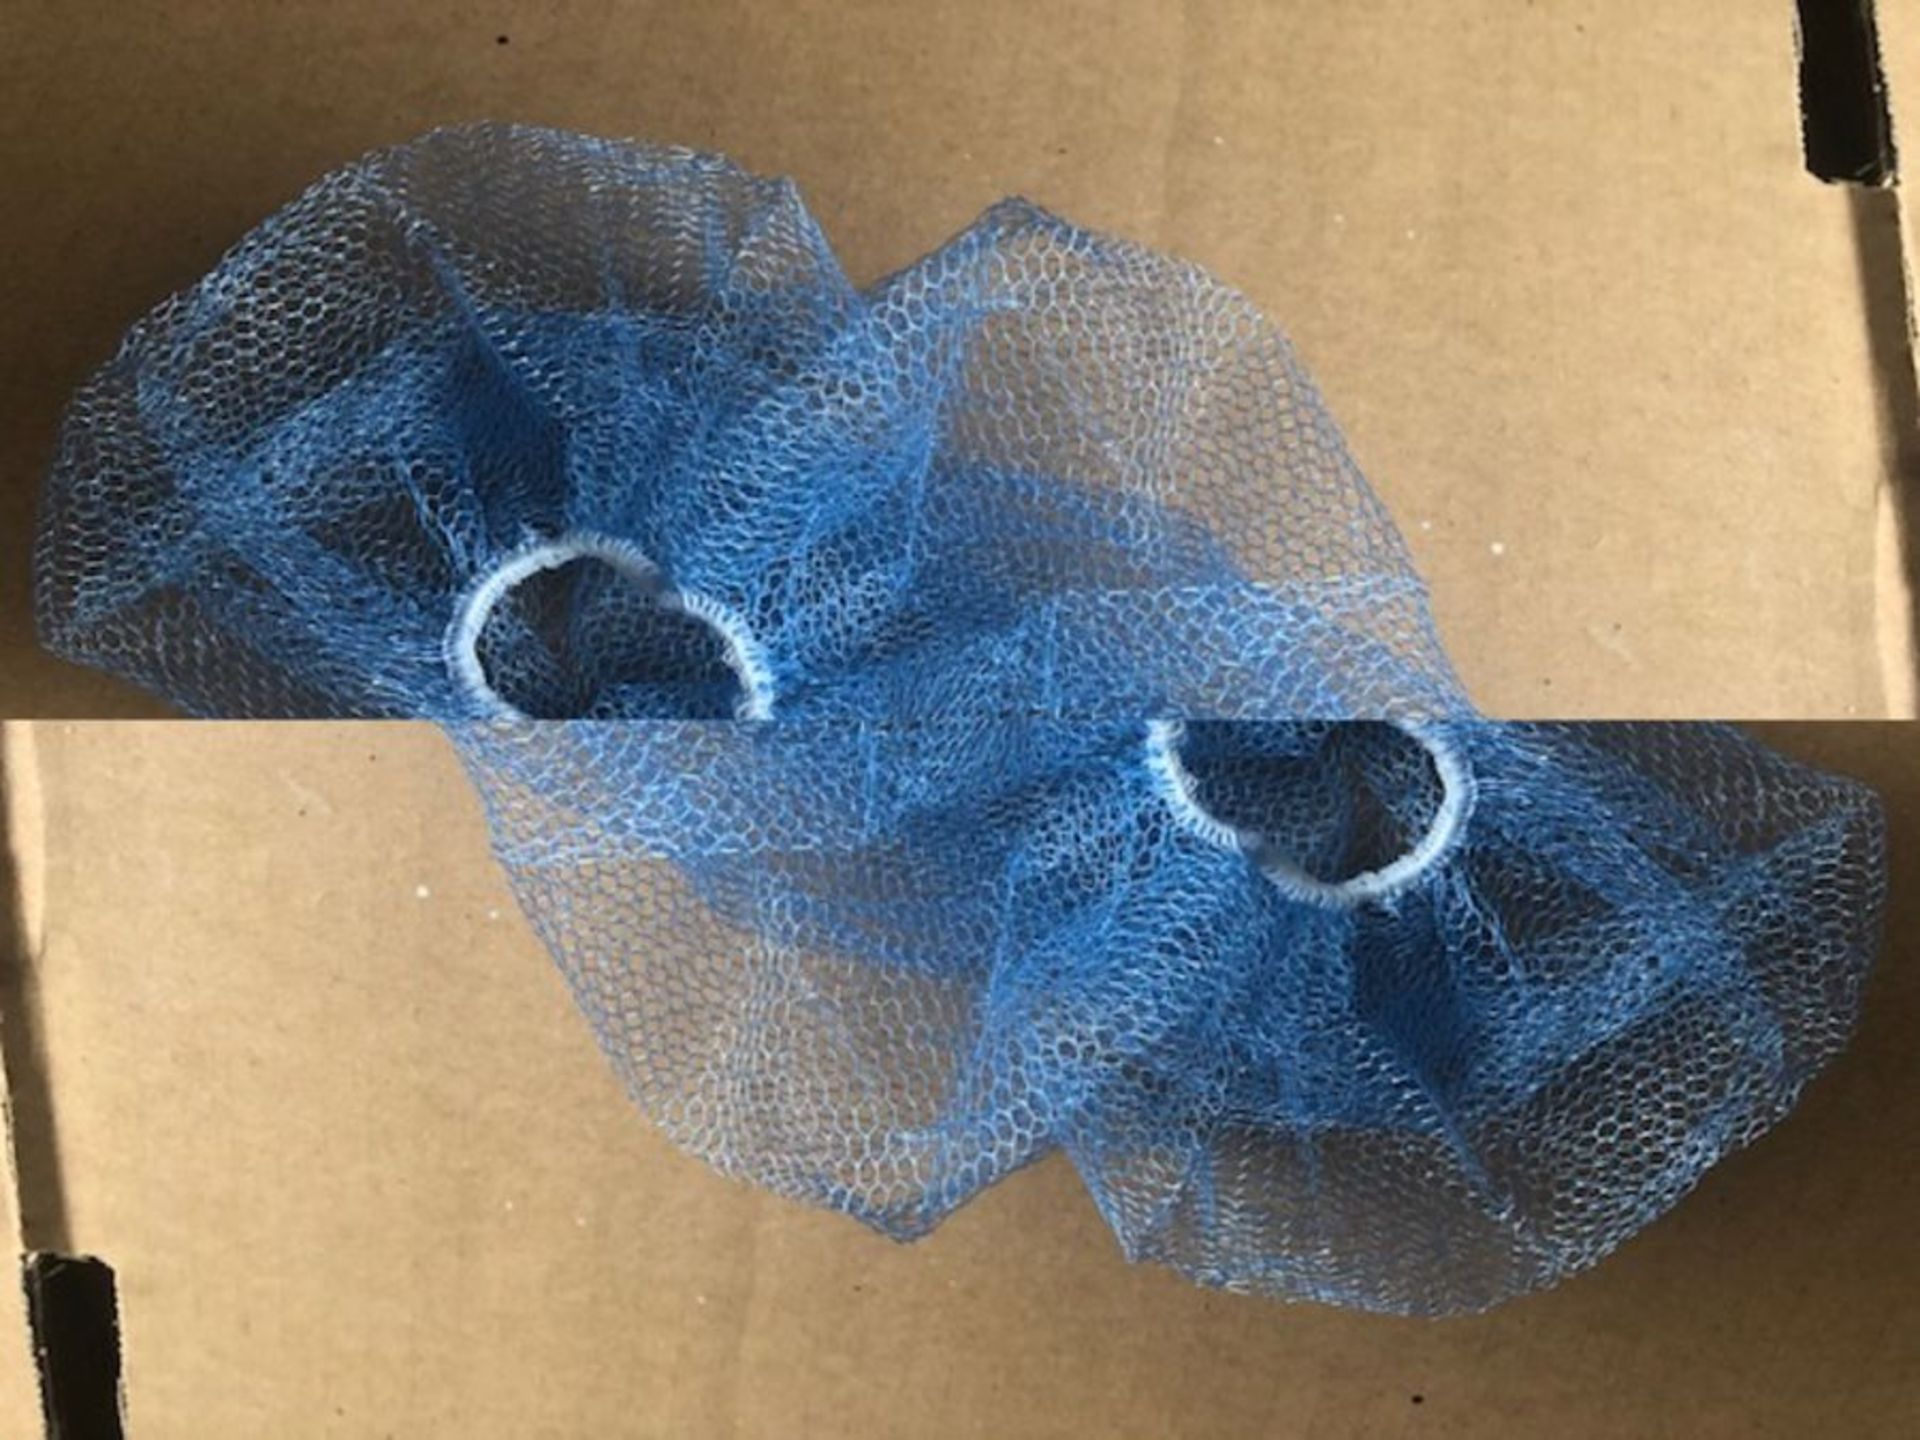 Box of 10,000 x Portwest D115 Nylon Disposable Hairnet - H9R 2000150939 - Image 4 of 6